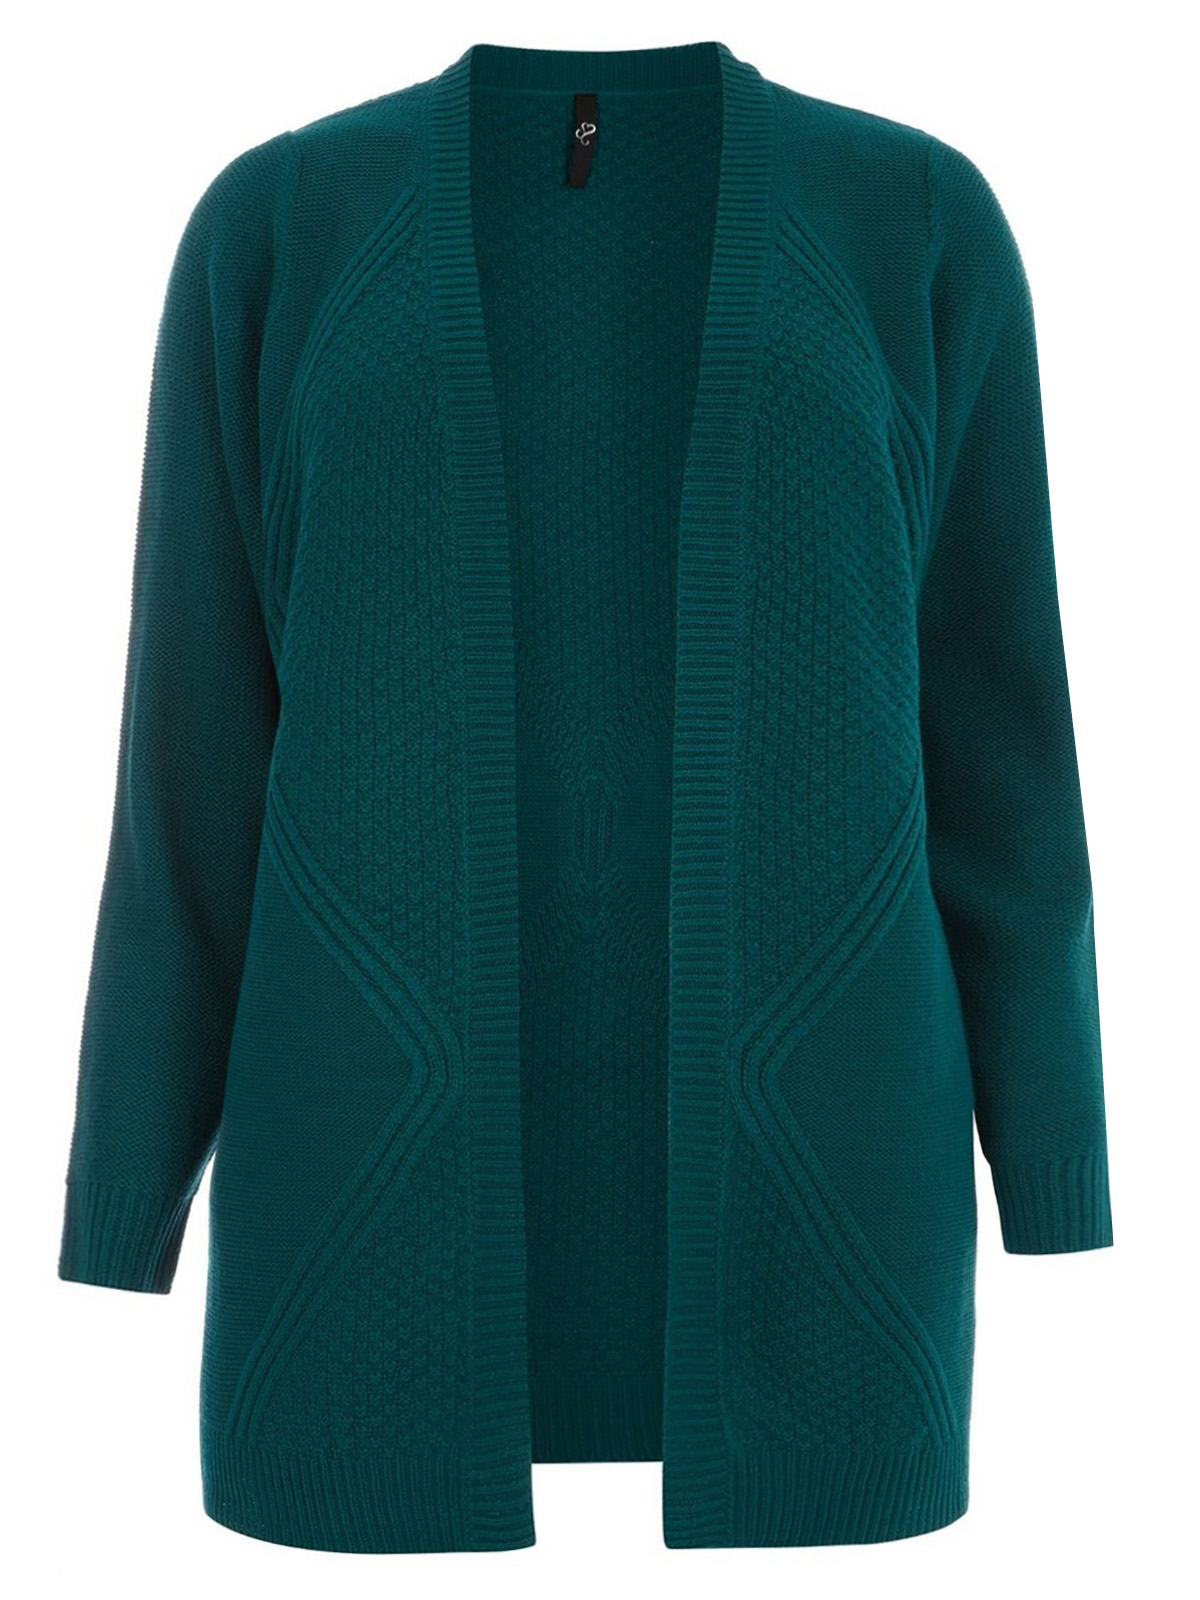 JADE GREEN Textured Knit Stitch Edge to Edge Cardigan - Plus Size 18/20 to